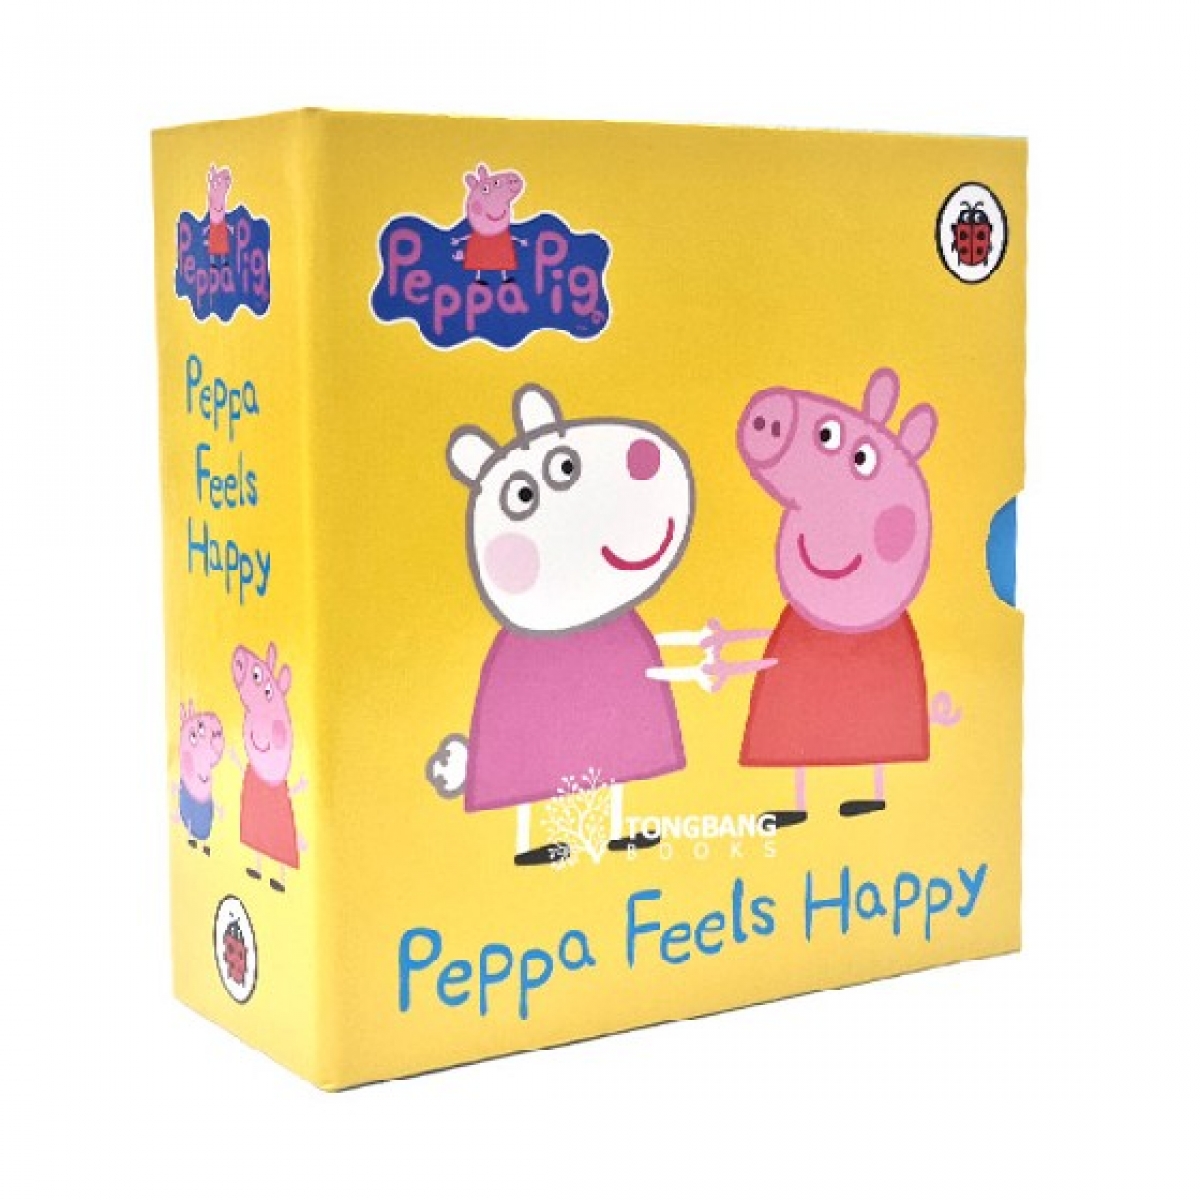 Peppa Feels Happy Slipcase 